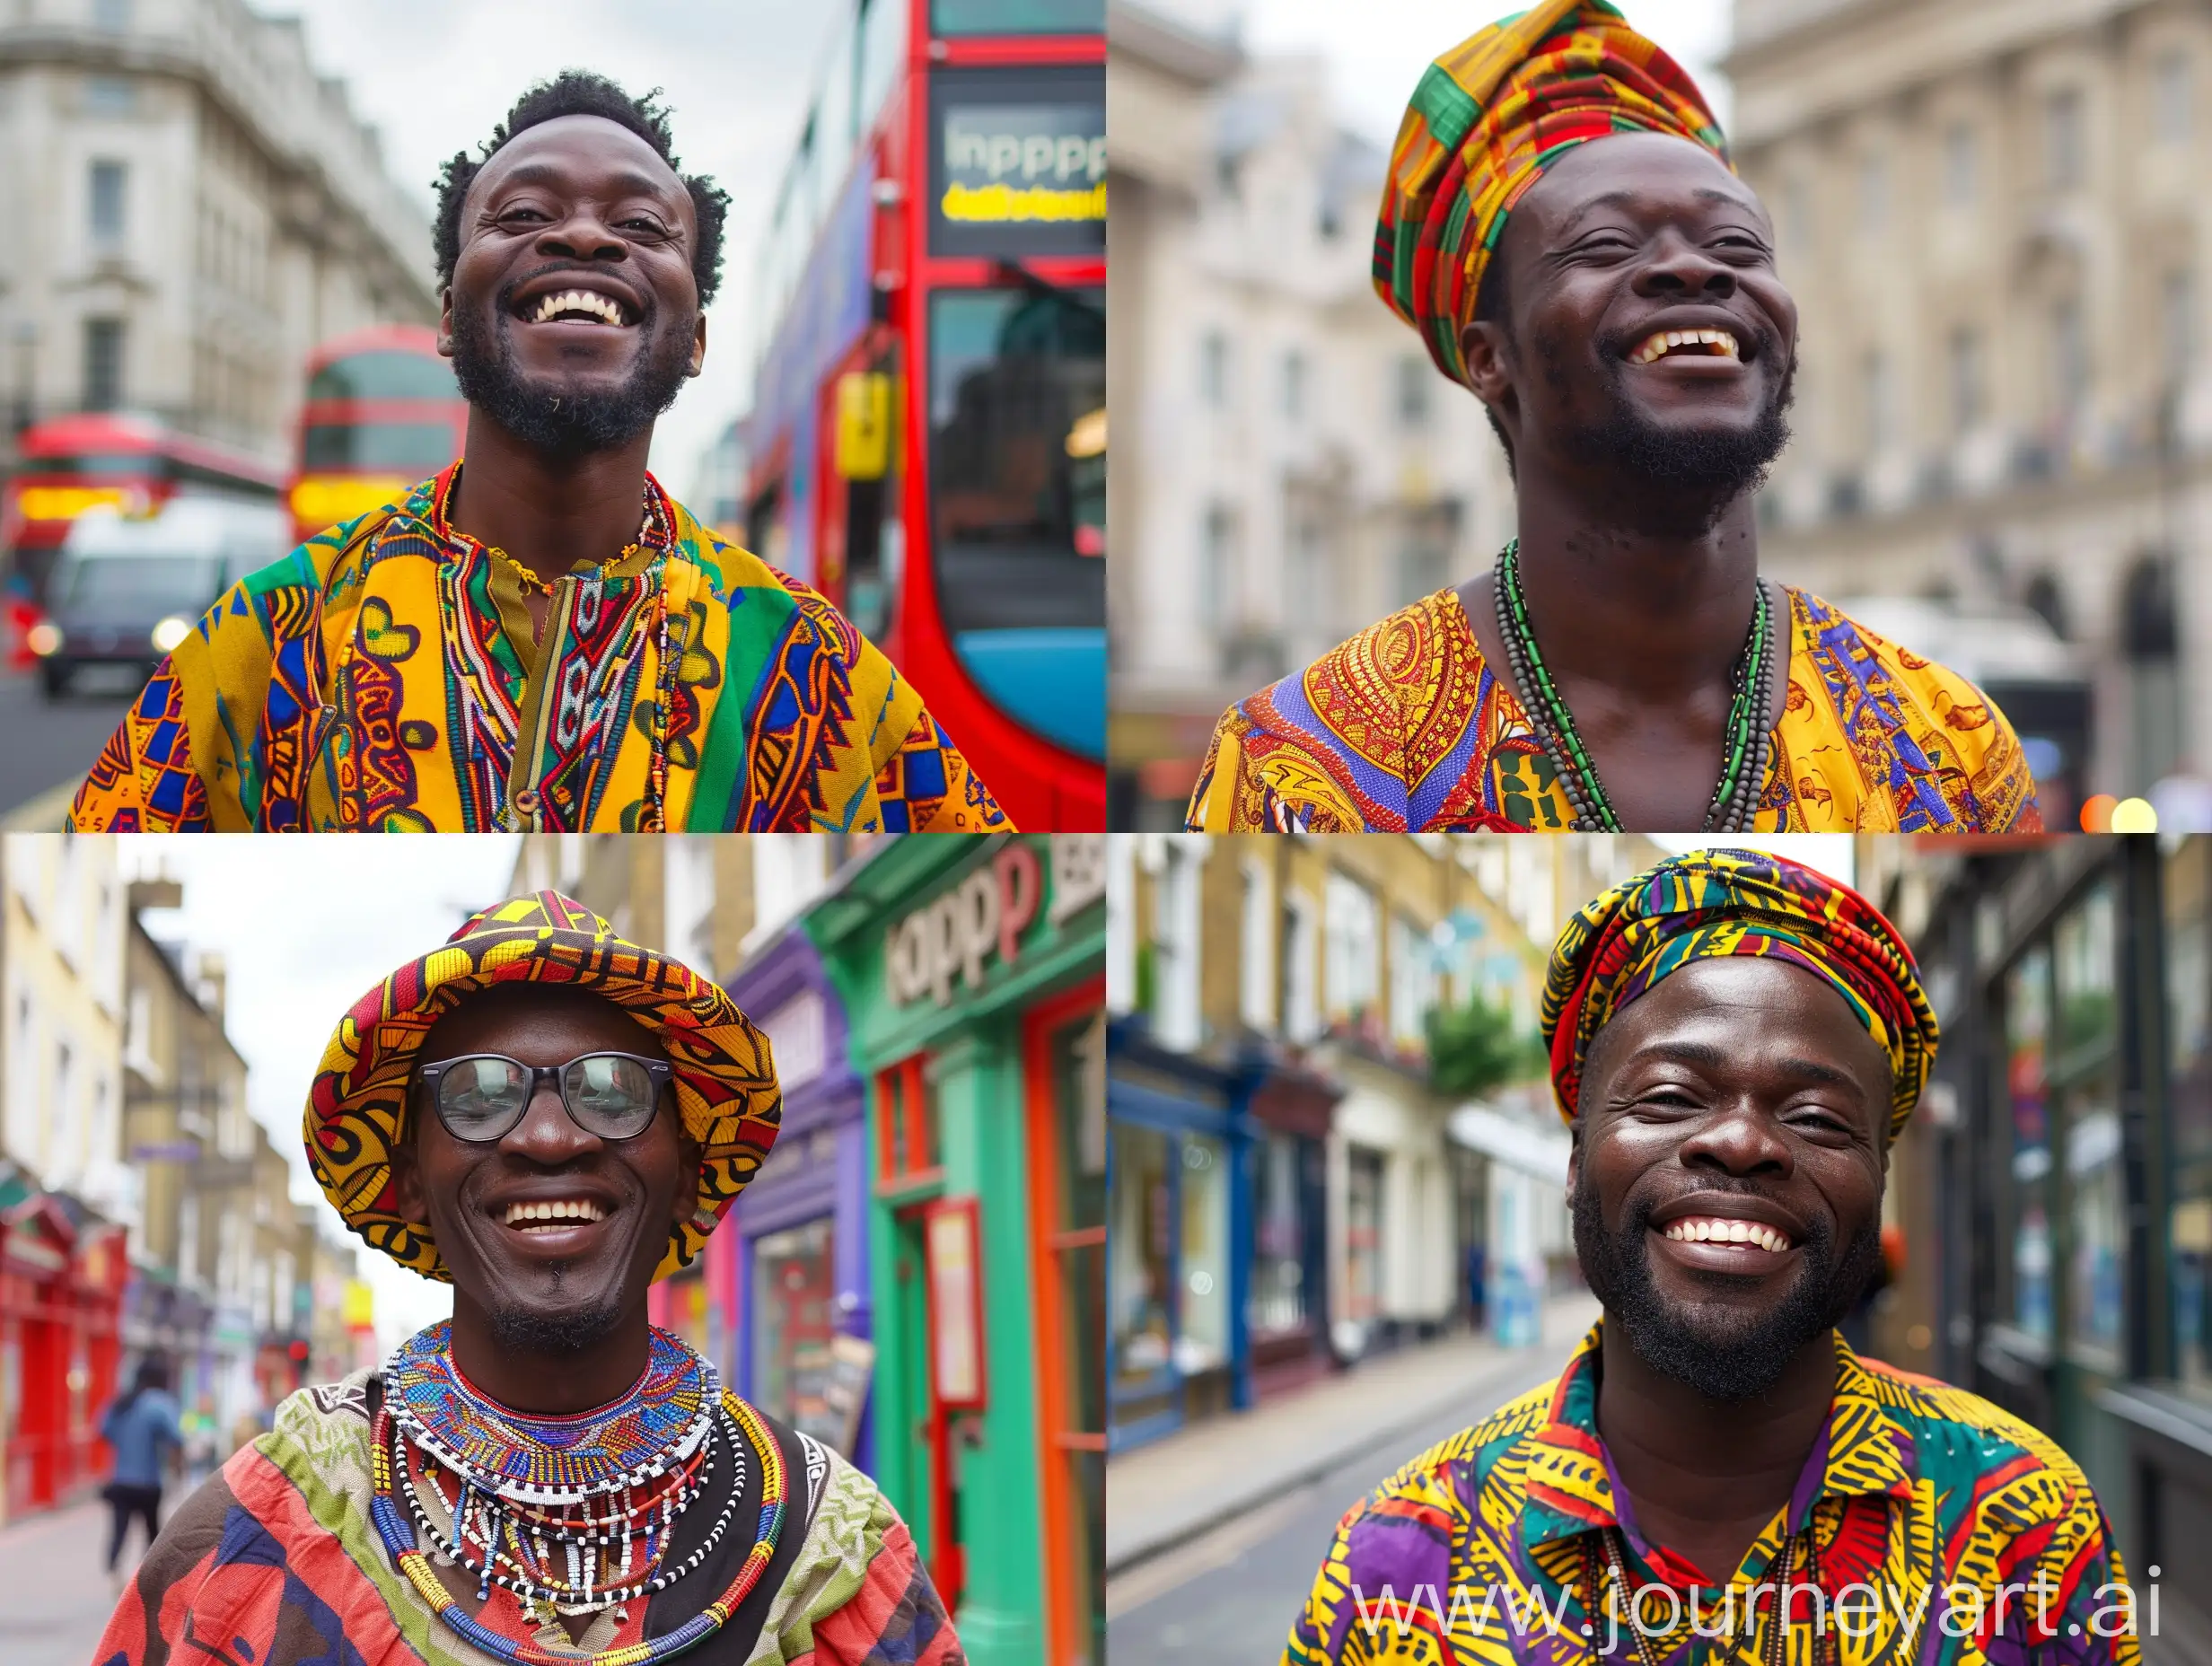 Joyful-African-Woman-Enjoying-a-Sunny-Day-in-London